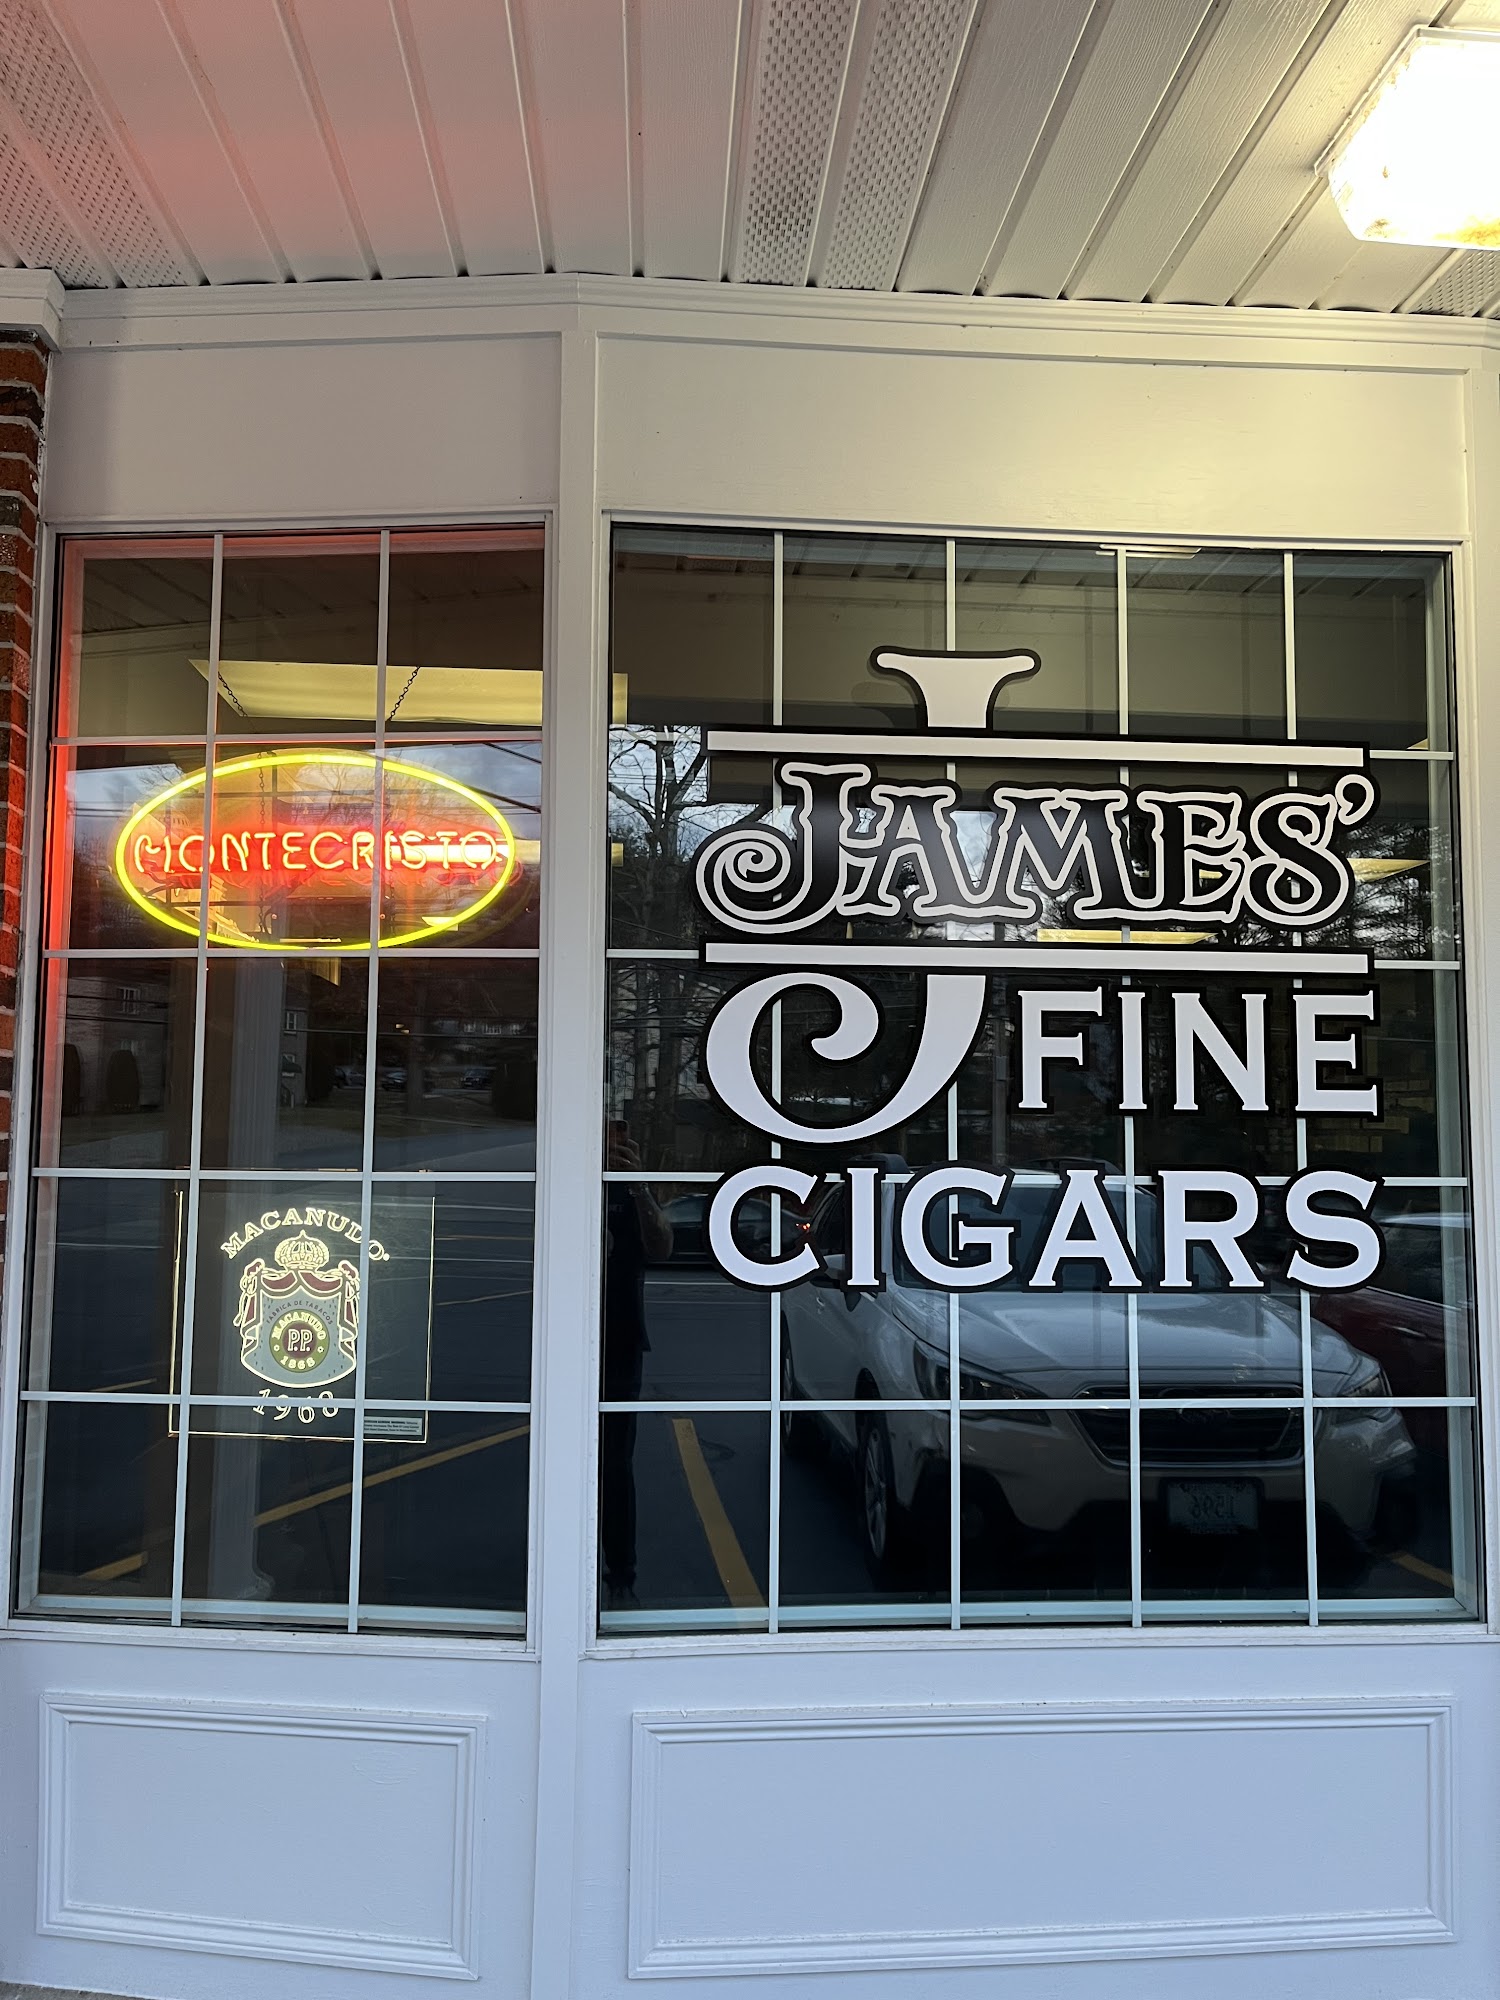 James’ Fine Cigars